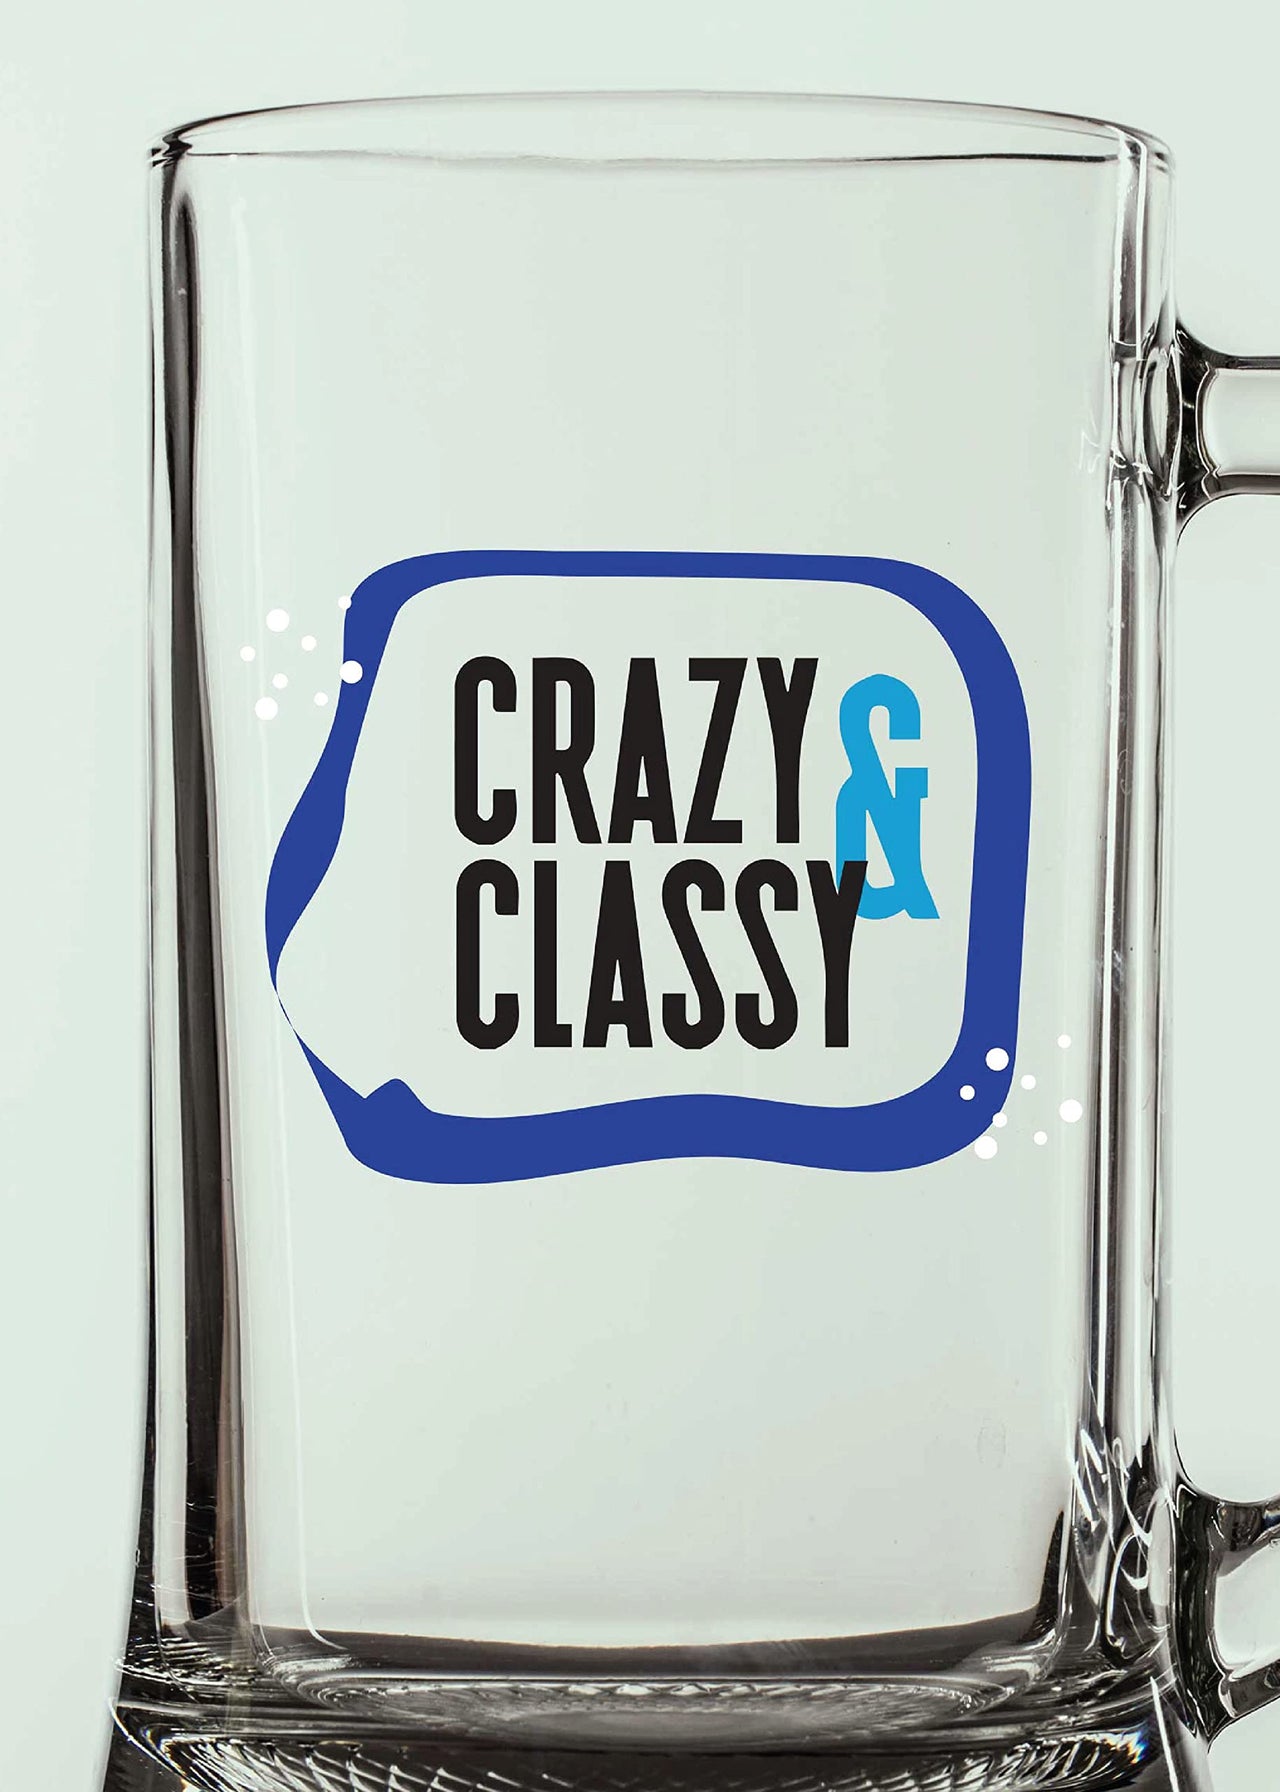 Crazy & Classy - Beer Mug - 1 Piece, Clear, 500 ml - Transparent Glass Beer Mug - Printed Beer Mug with Handle Gift for Men, Dad